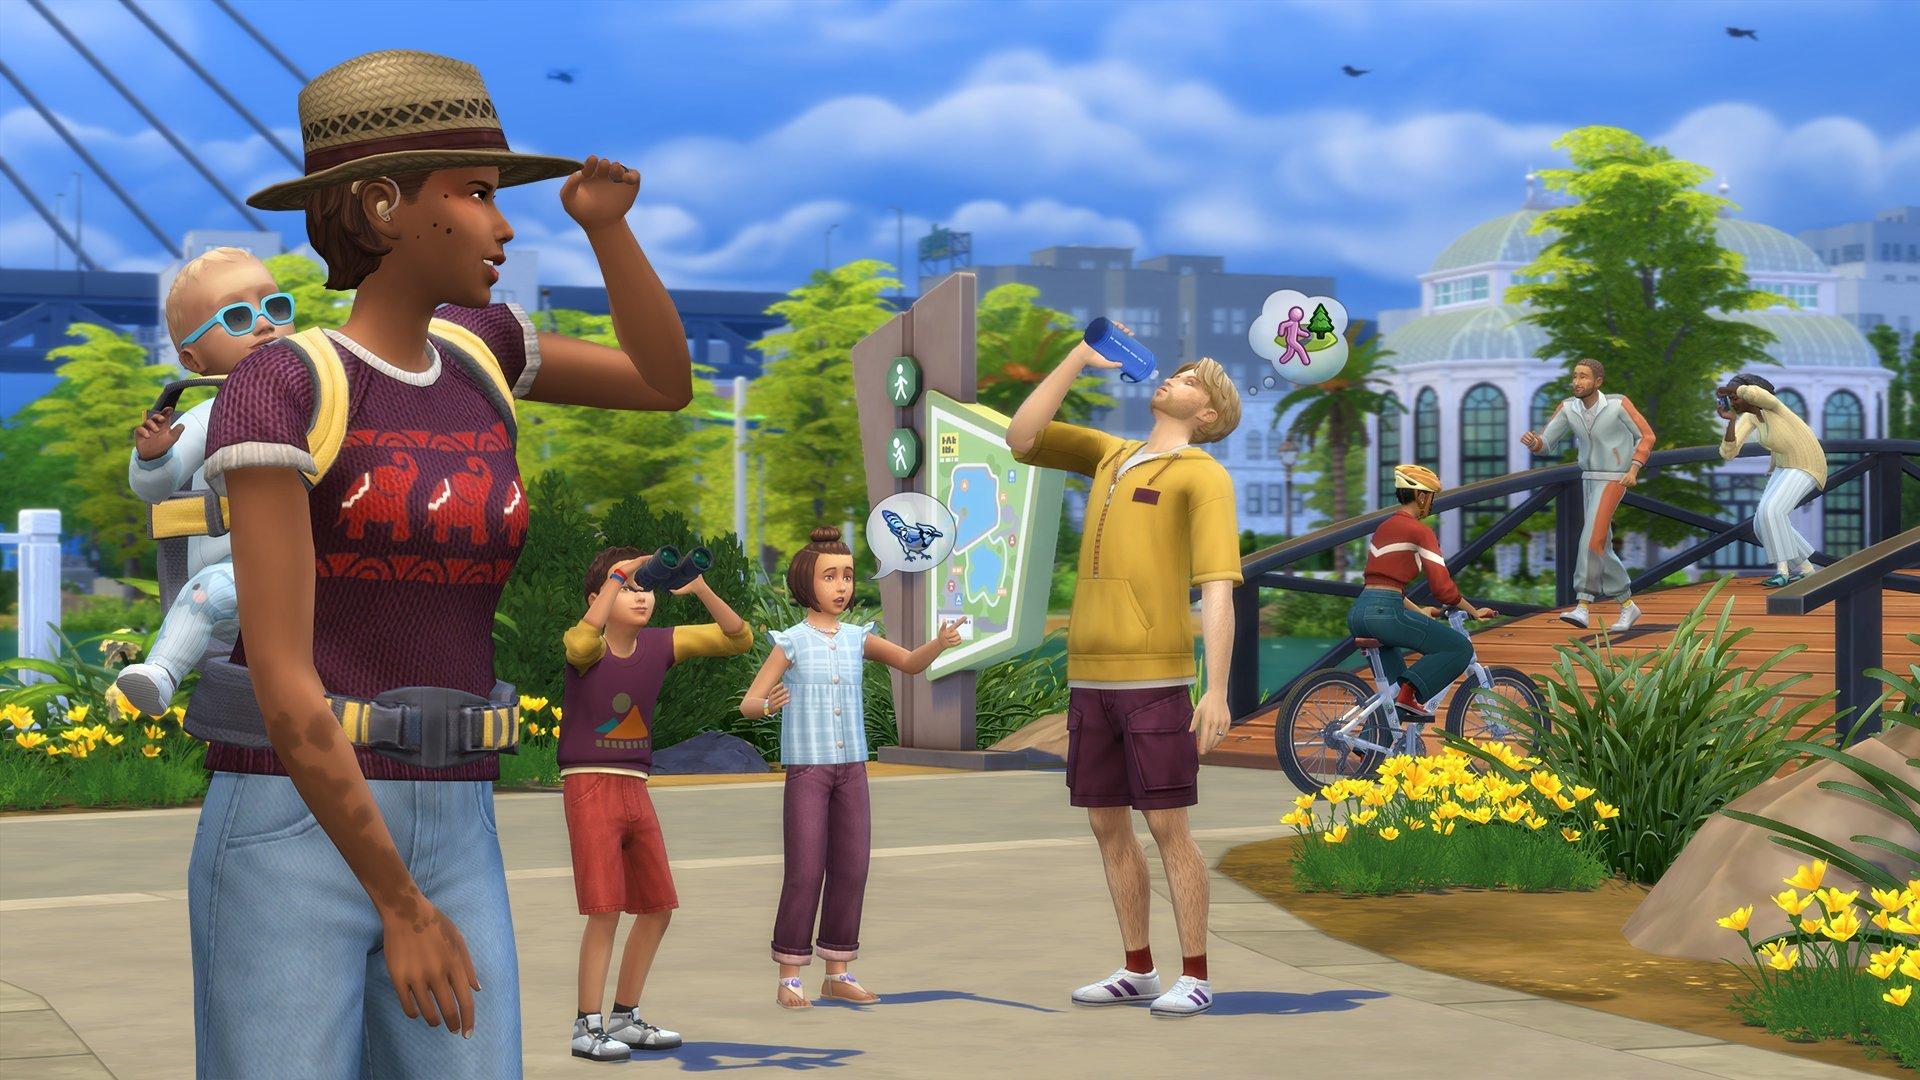 The Sims 4 - PC Origin, Electronic Arts, GameStop